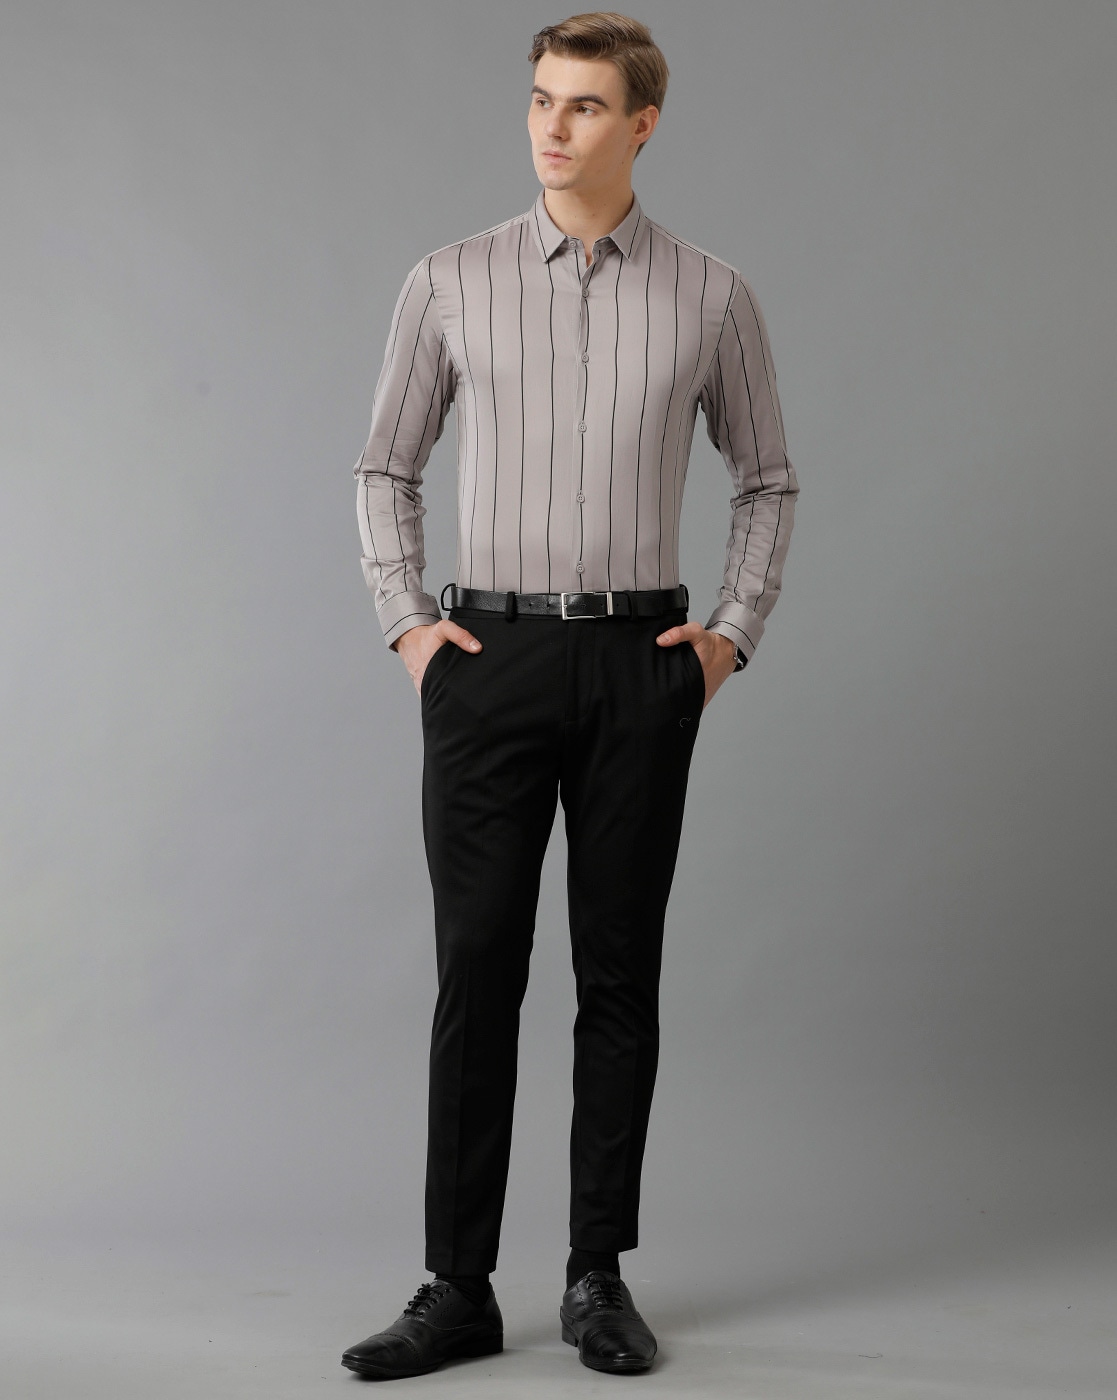 Buy Grey Formal Trousers Online in India at Best Price - Westside